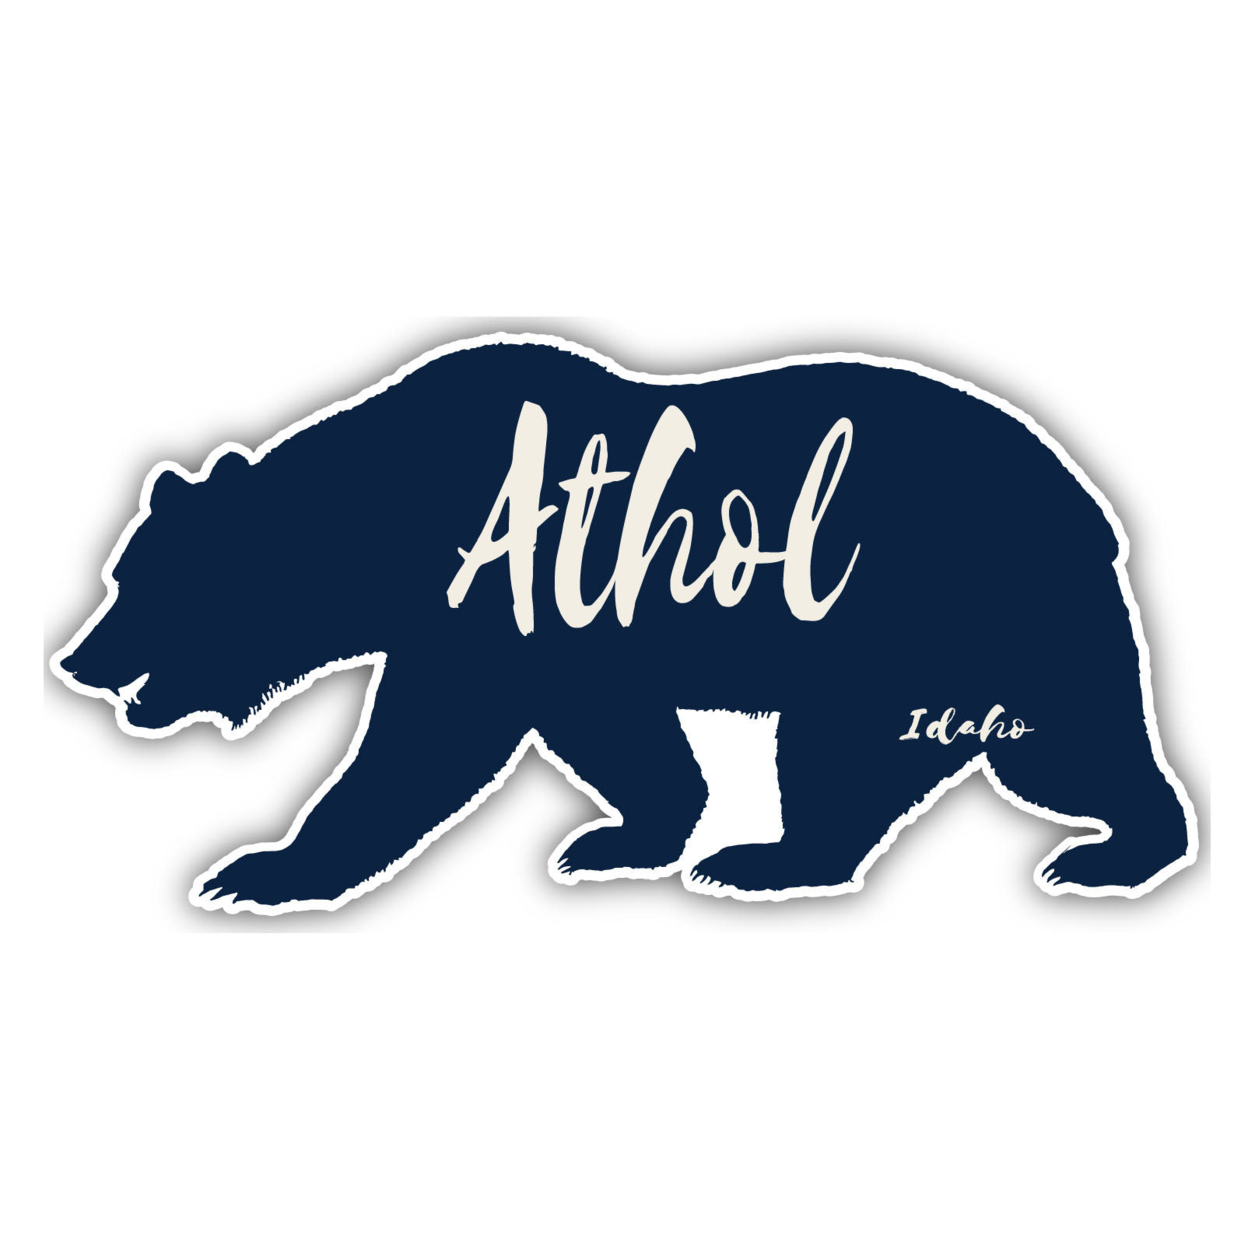 Athol Idaho Souvenir Decorative Stickers (Choose Theme And Size) - Single Unit, 4-Inch, Bear